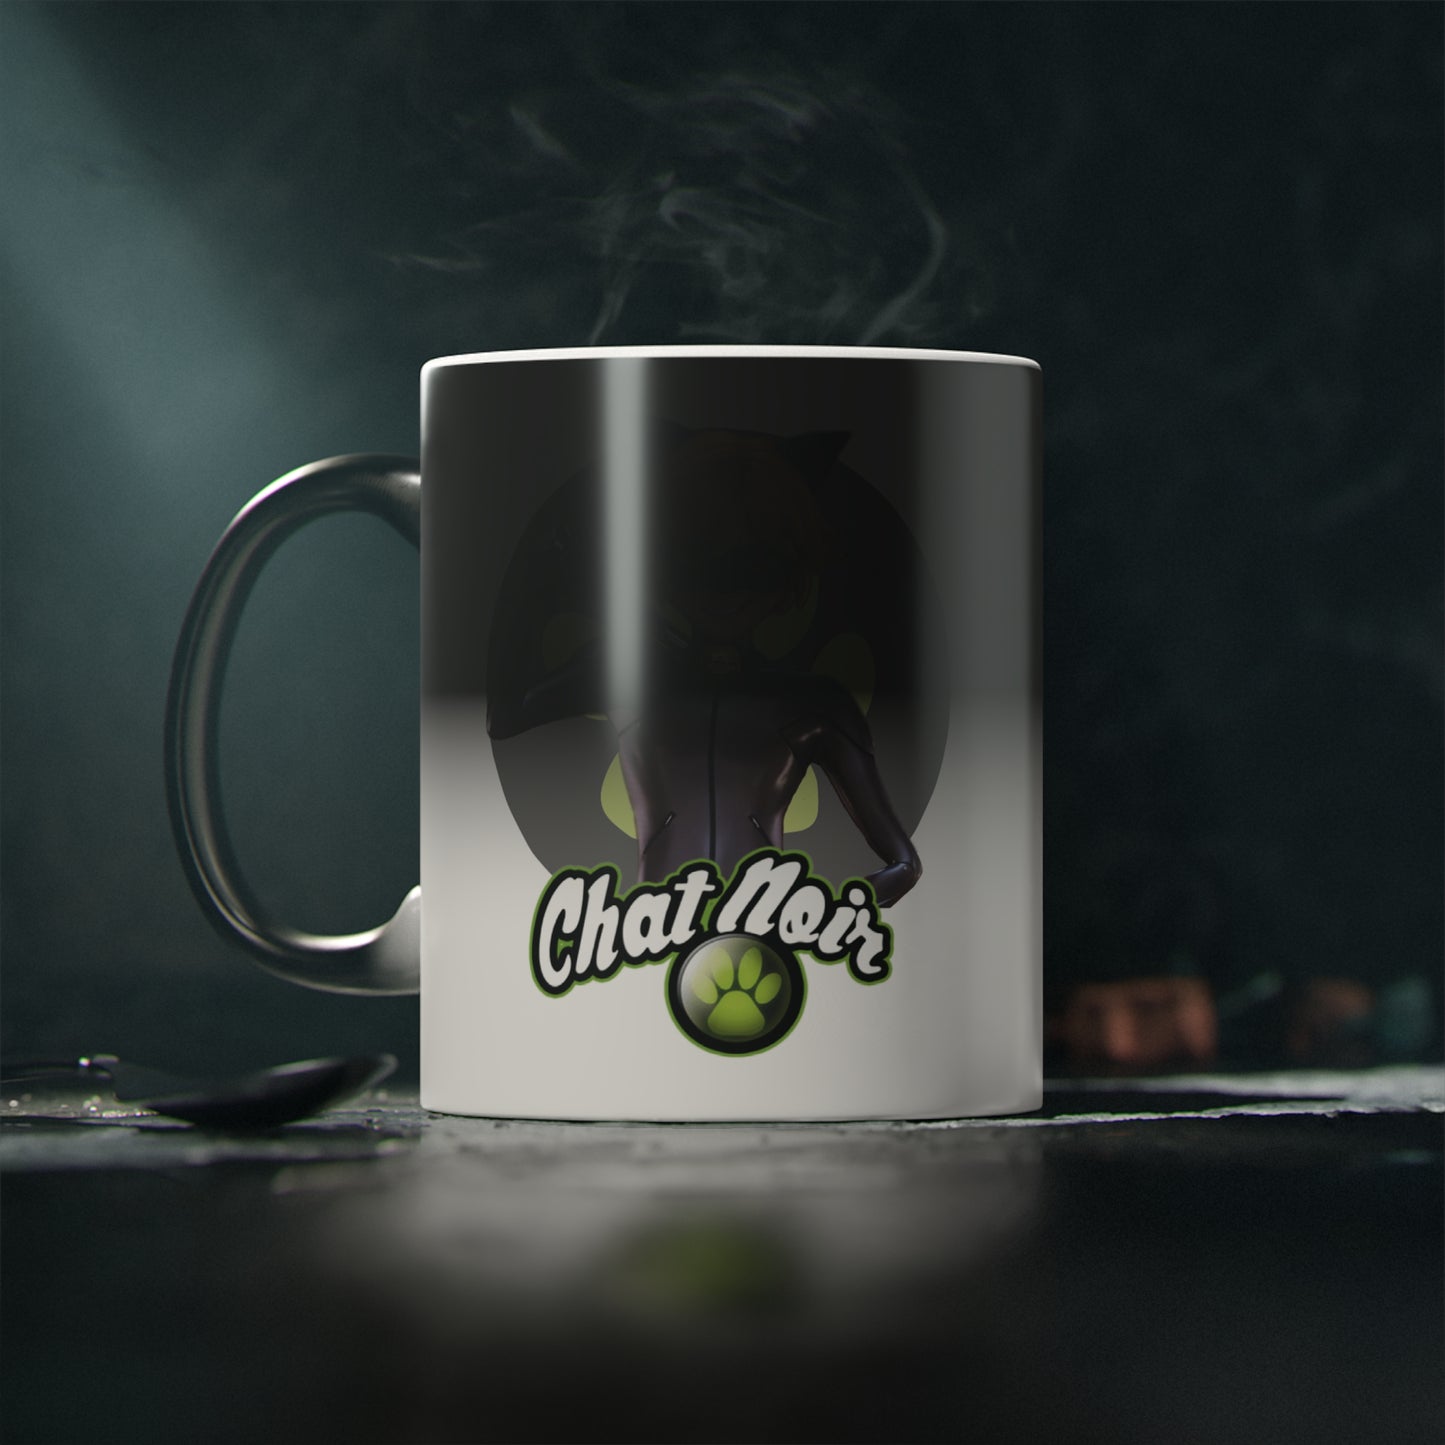 Chat Noir Gift Kit Loving Plush + Personalized Magic Mug